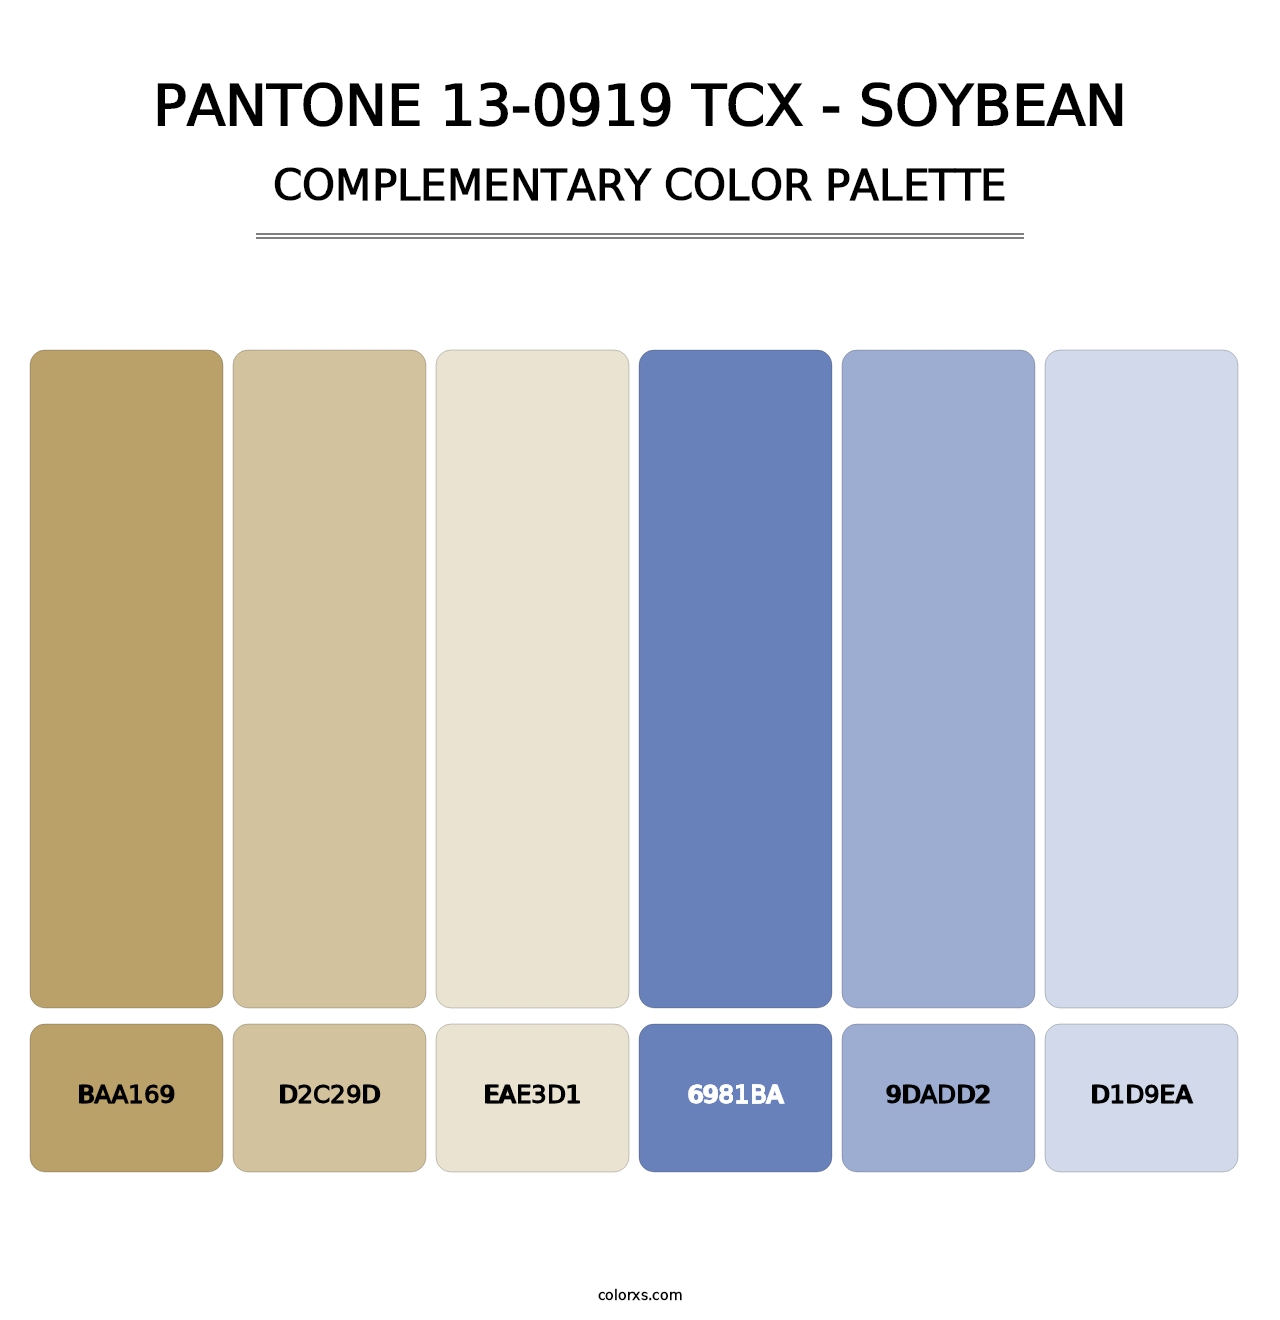 PANTONE 13-0919 TCX - Soybean - Complementary Color Palette